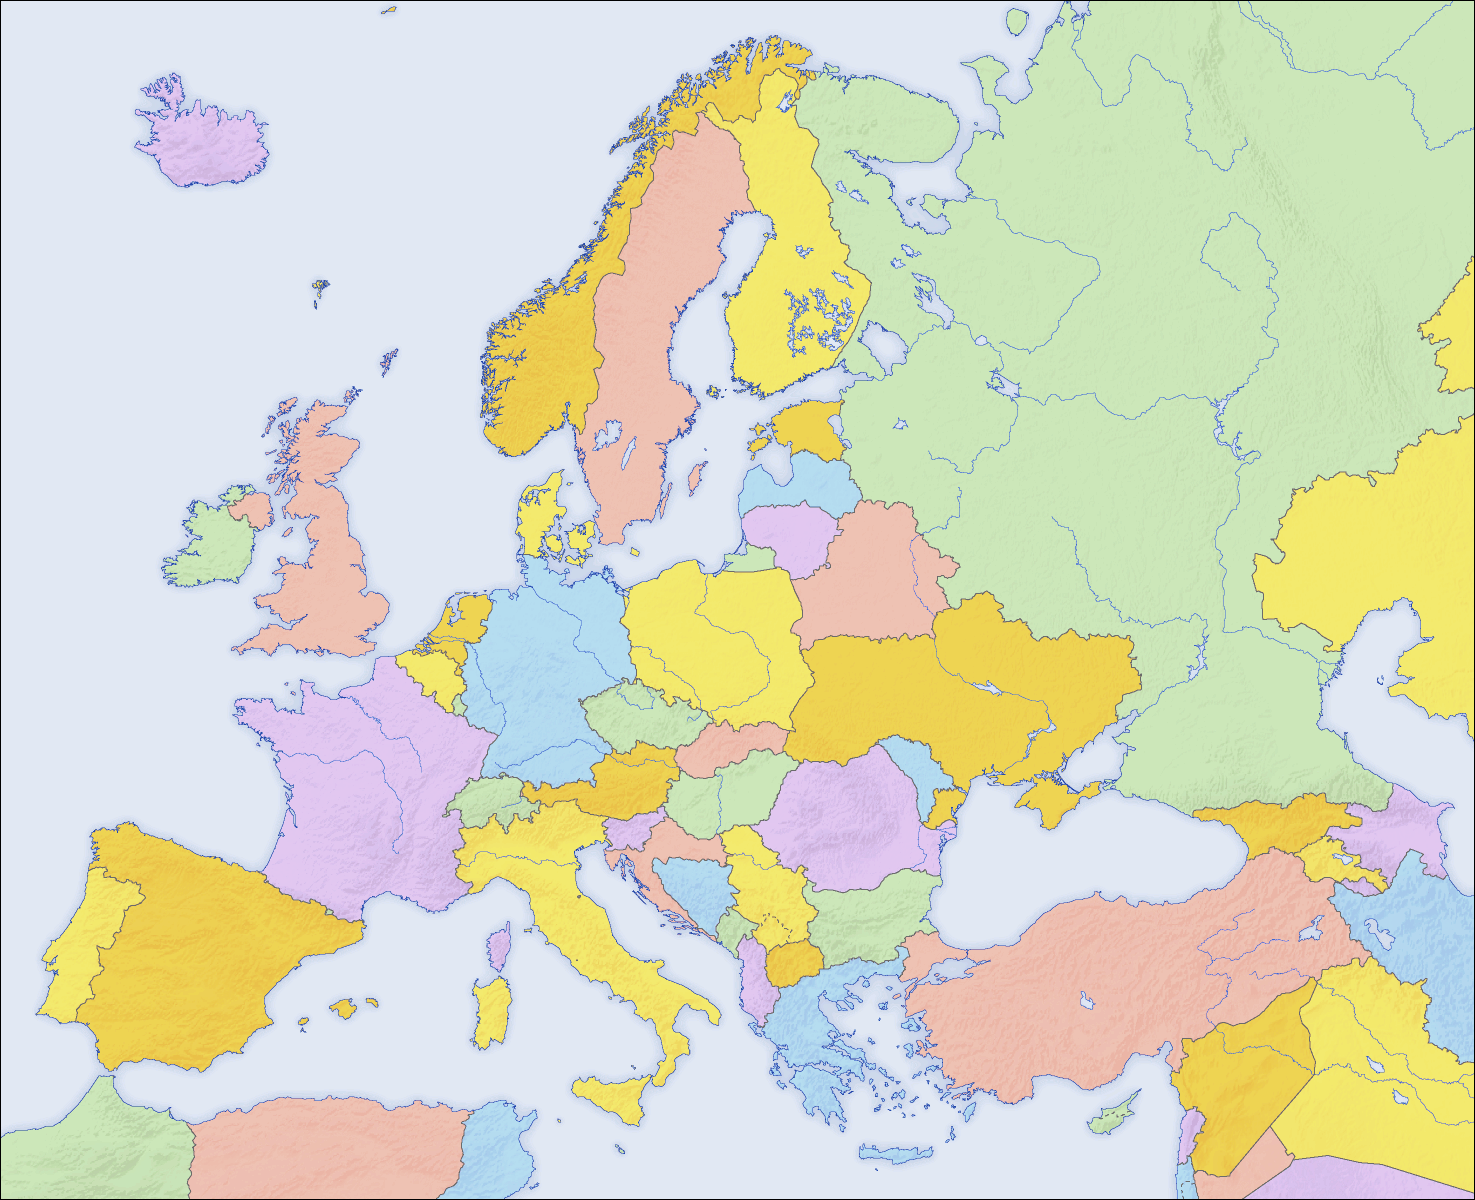 Mapa político mudo de Europa